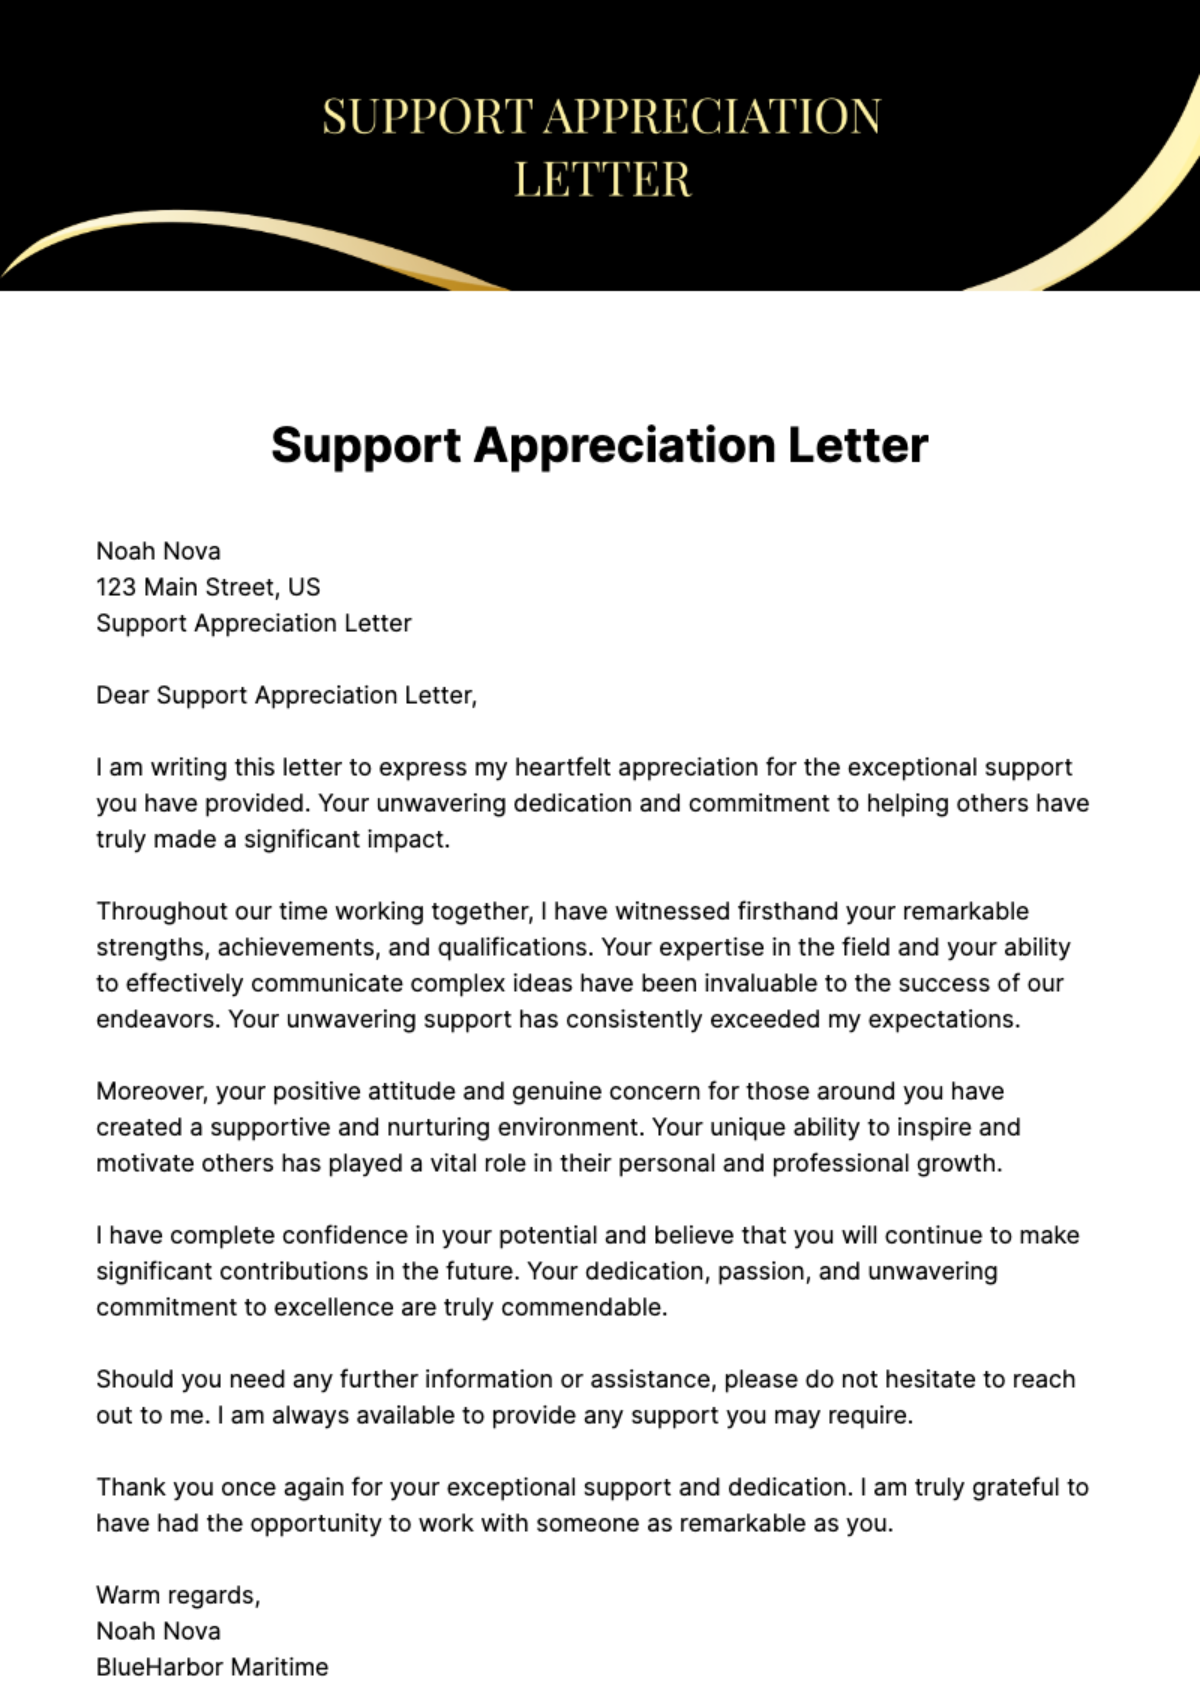 Support Appreciation Letter Template